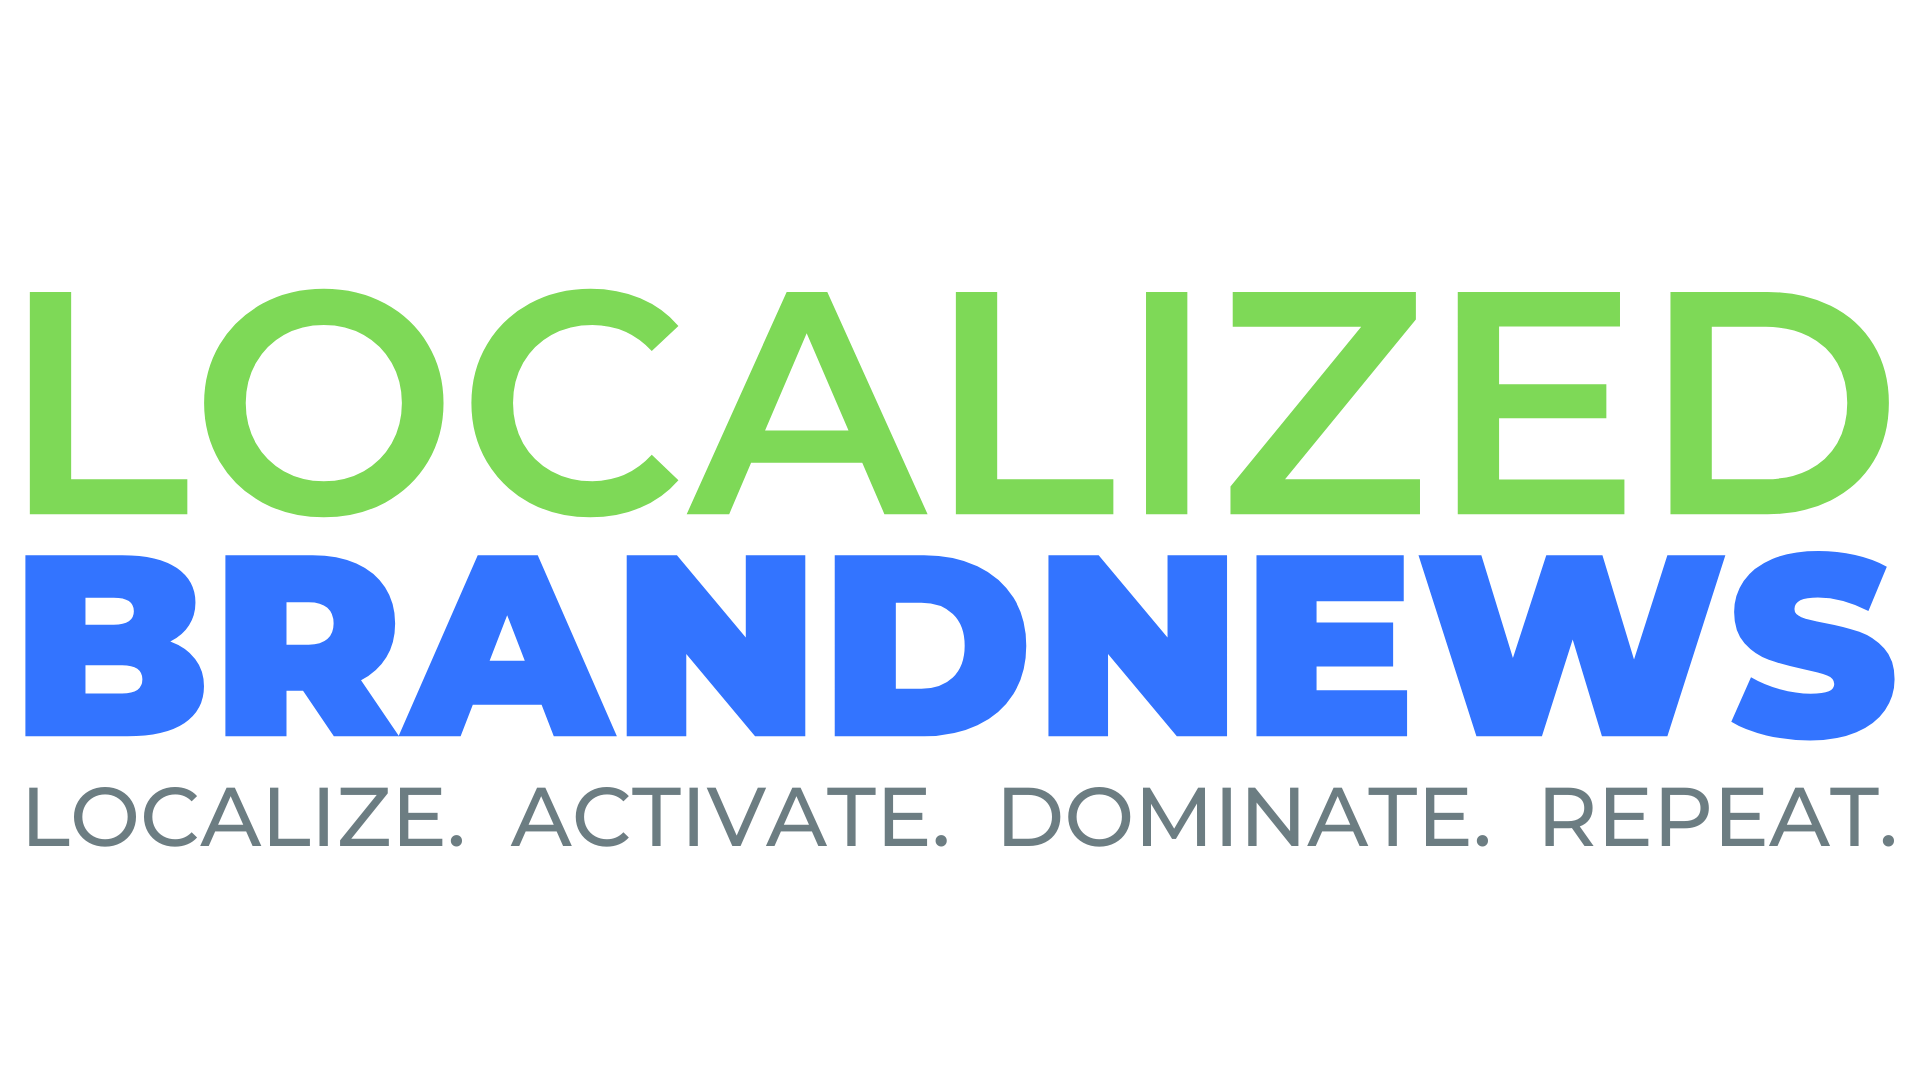 Localogy Live - Localized BrandNews Podcast, Vodcast